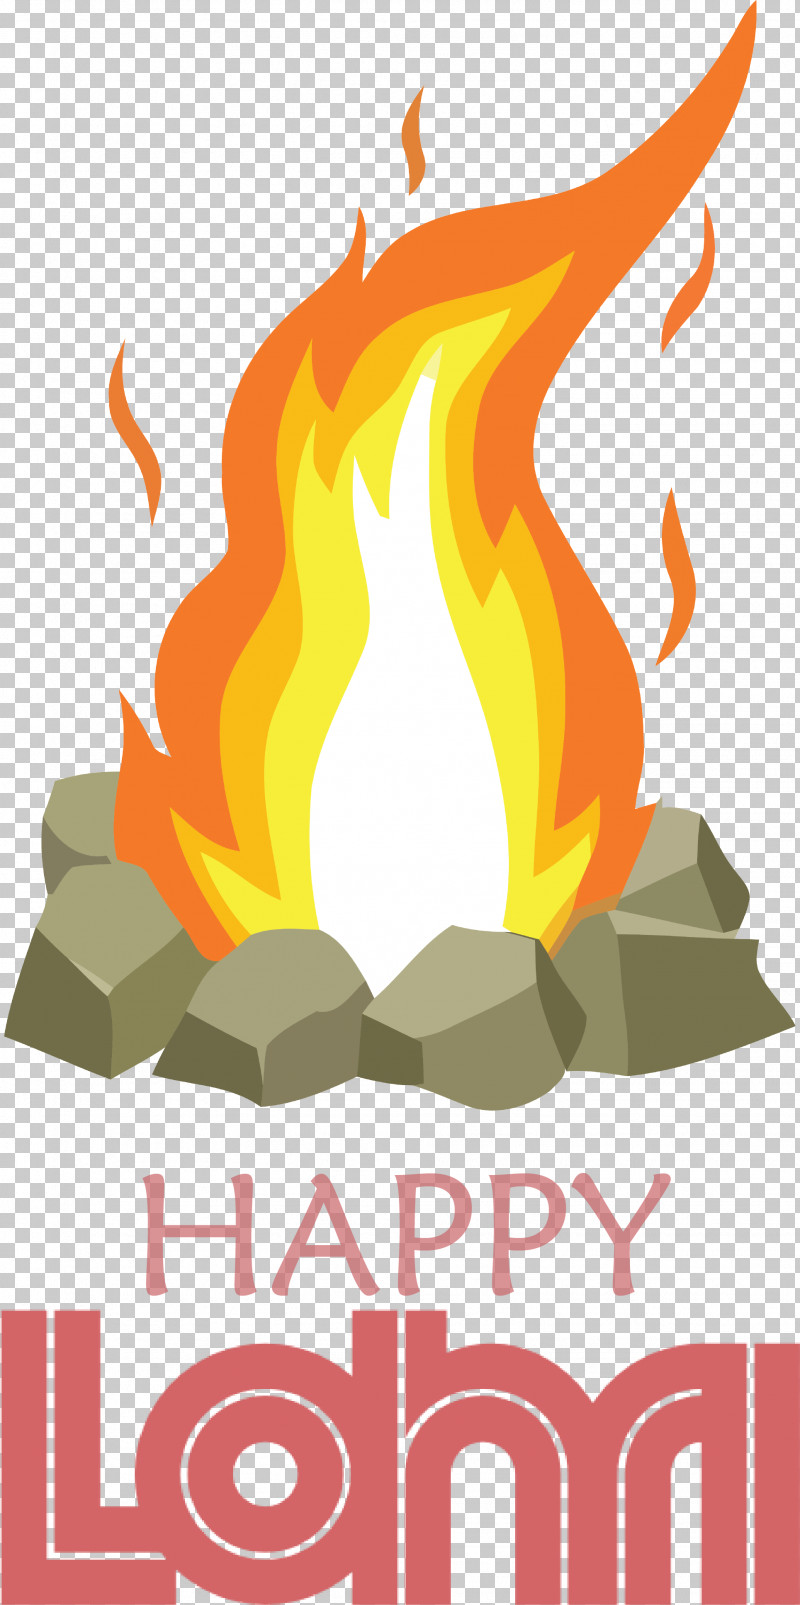 Happy Lohri PNG, Clipart, Bonfire, Campfire, Camping, Cartoon, Drawing Free PNG Download